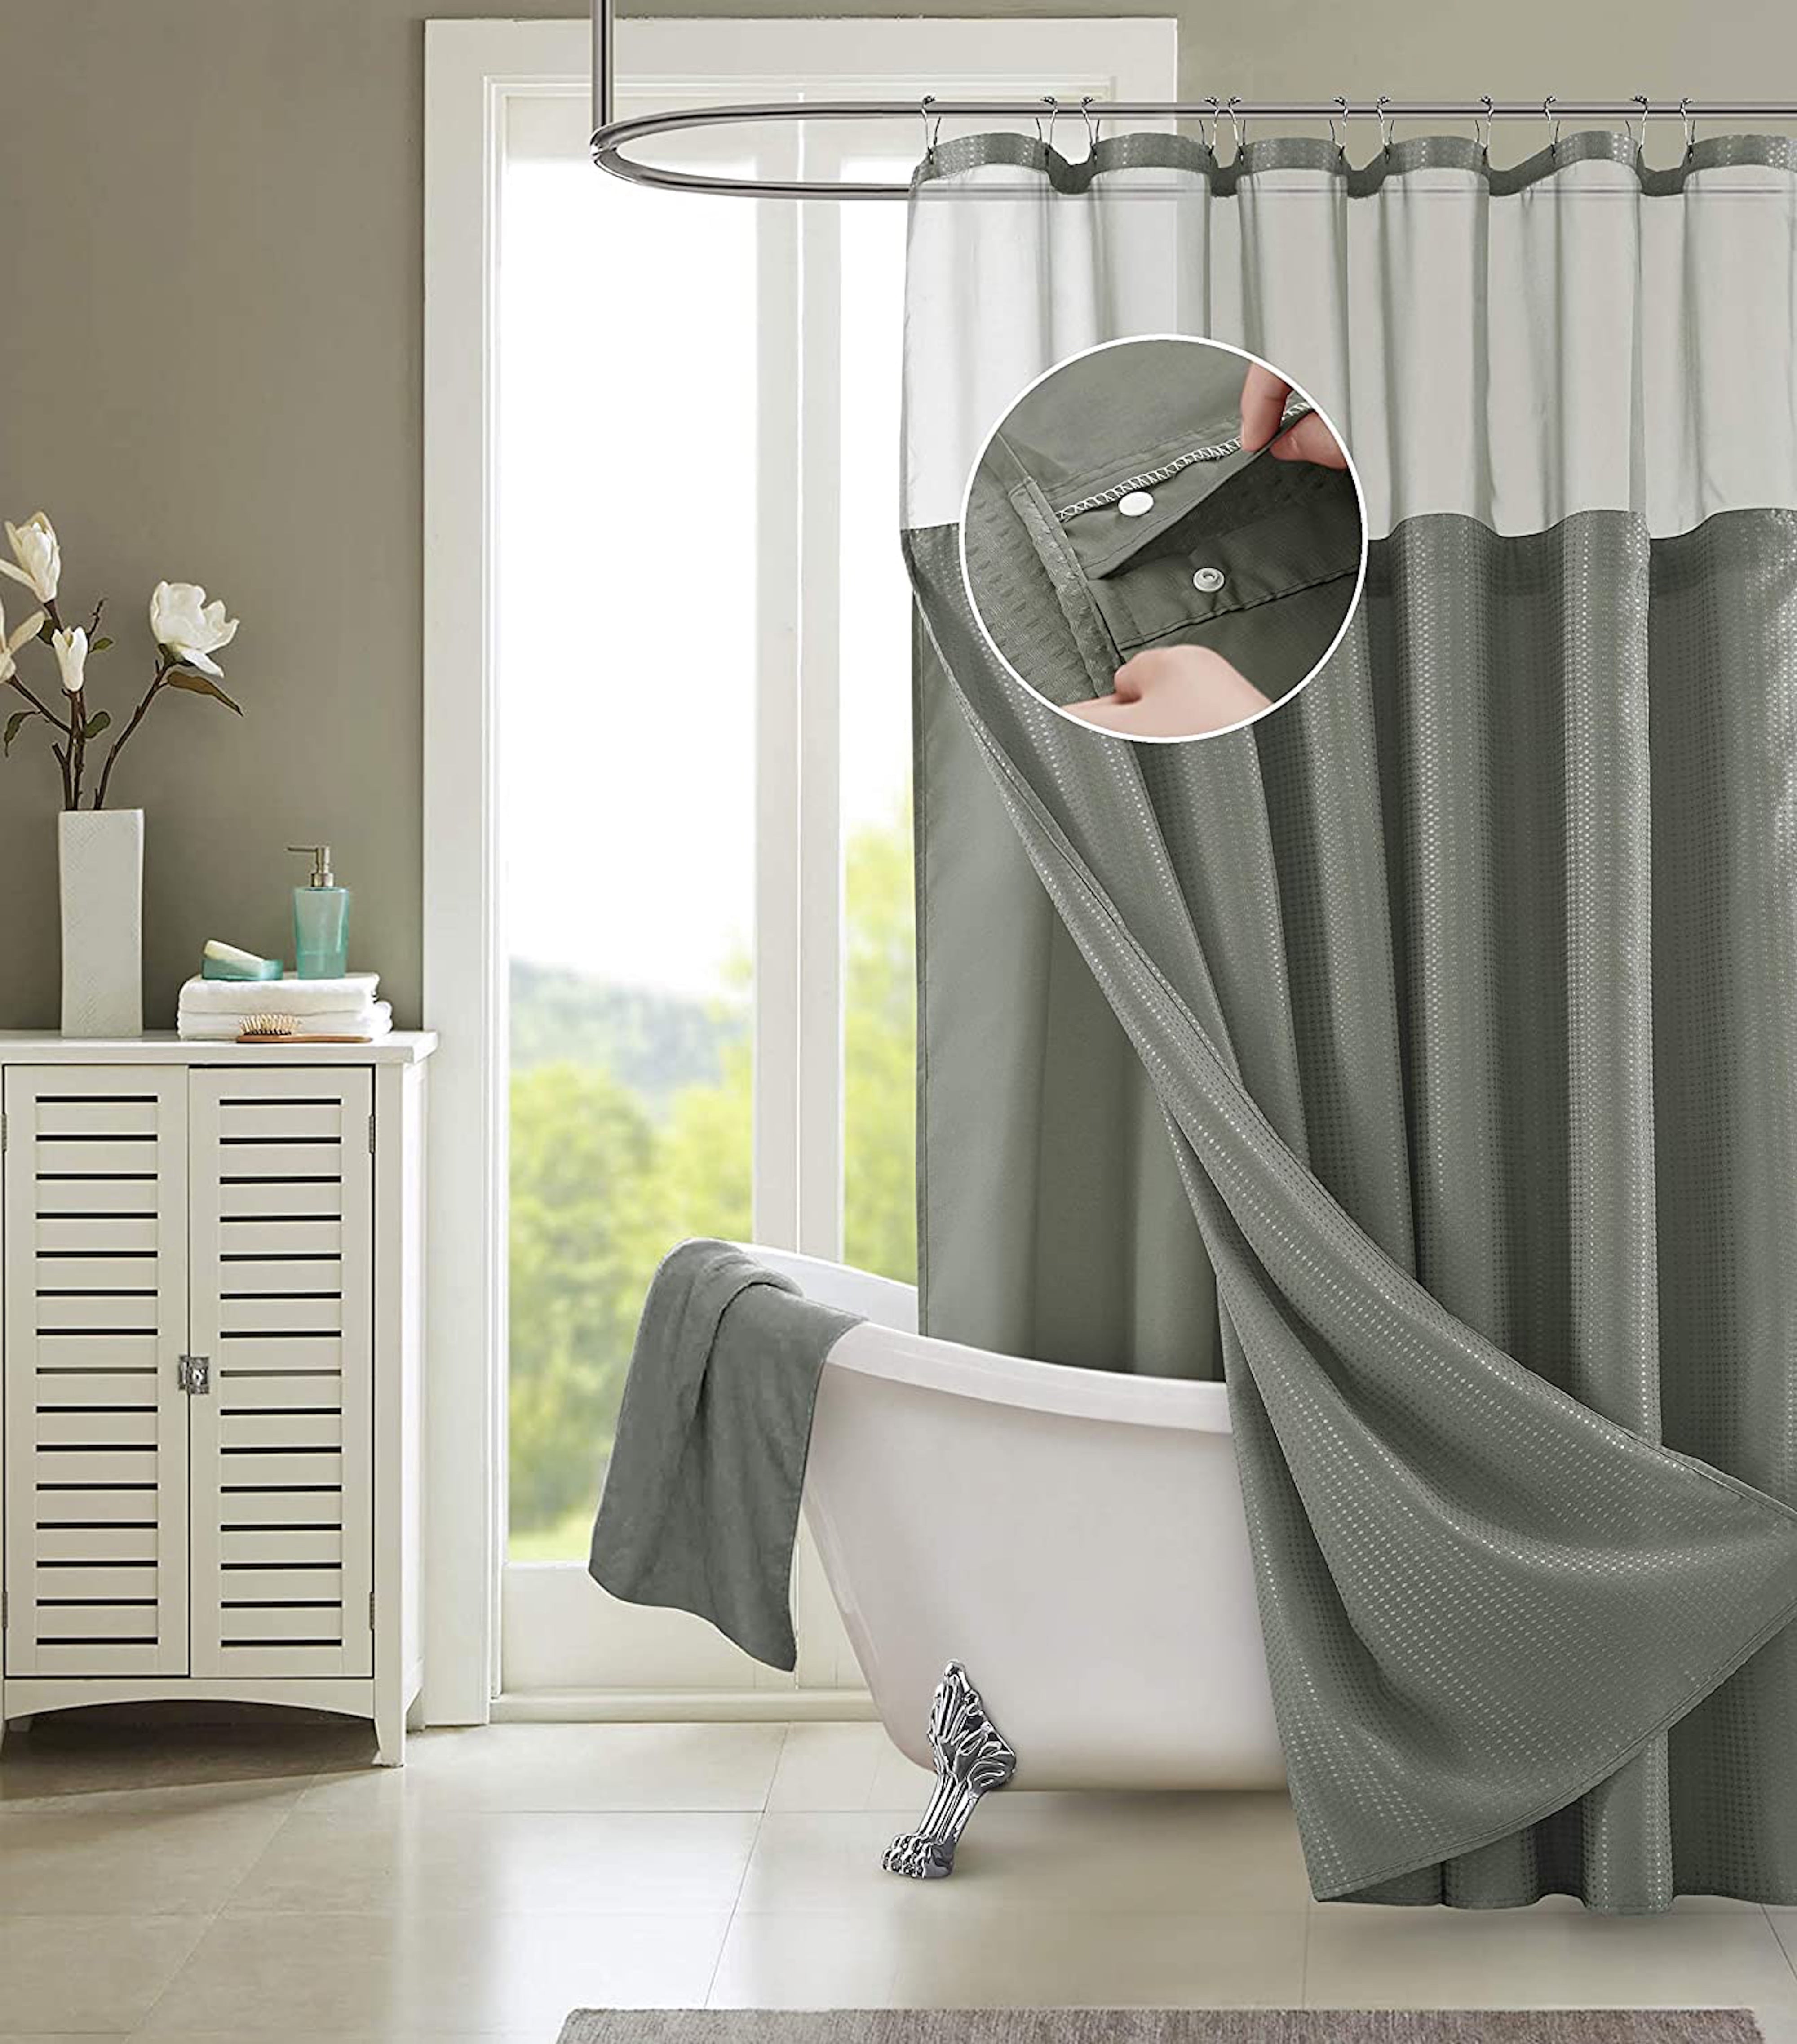 Bathroom Set Fabric Shower Curtain Liner Hooks Merry Christmas Theme Home Decor 